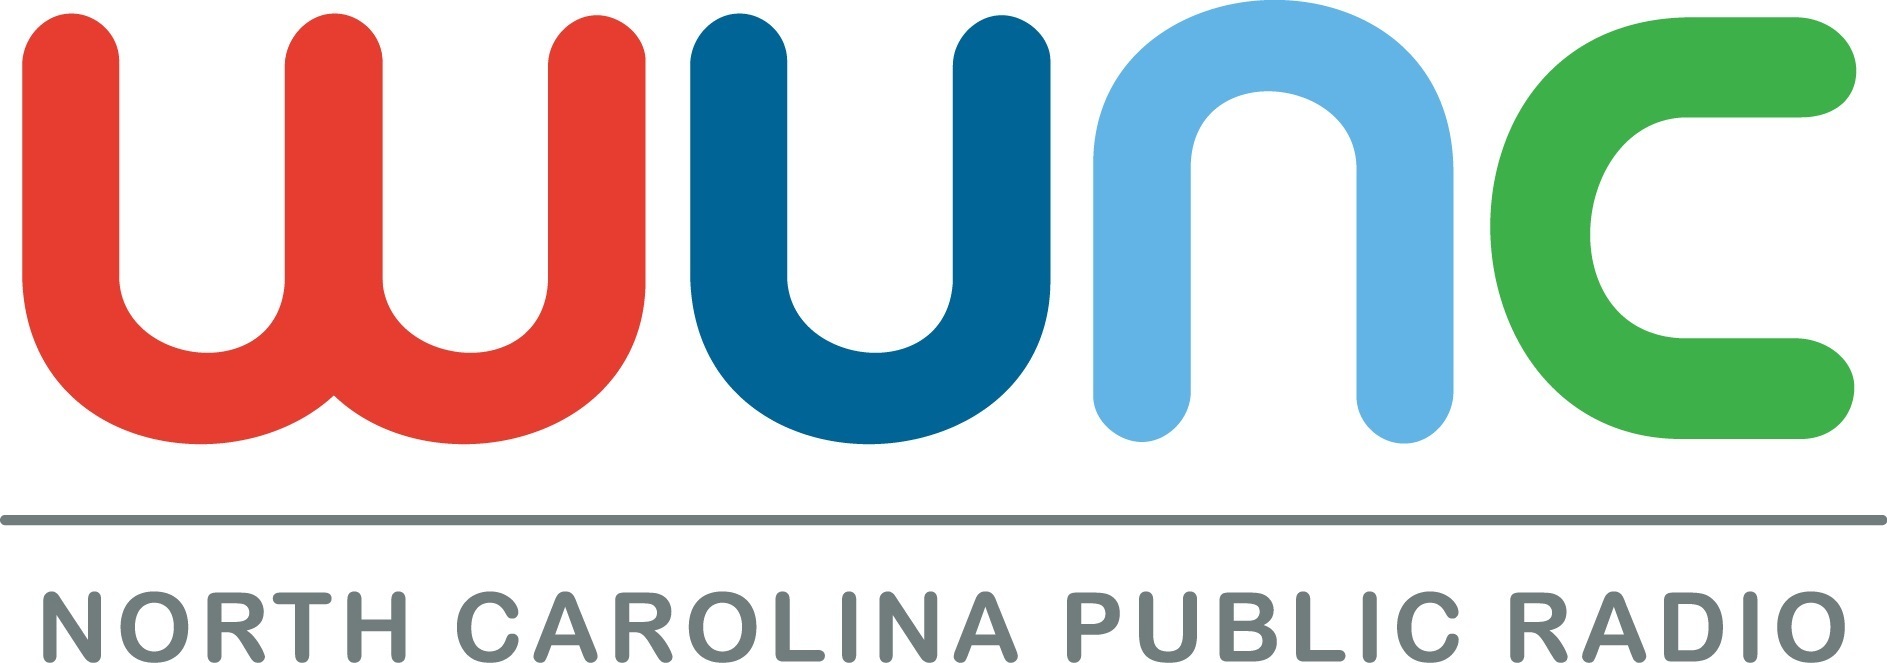 WUNC North Carolina Public Radio logo